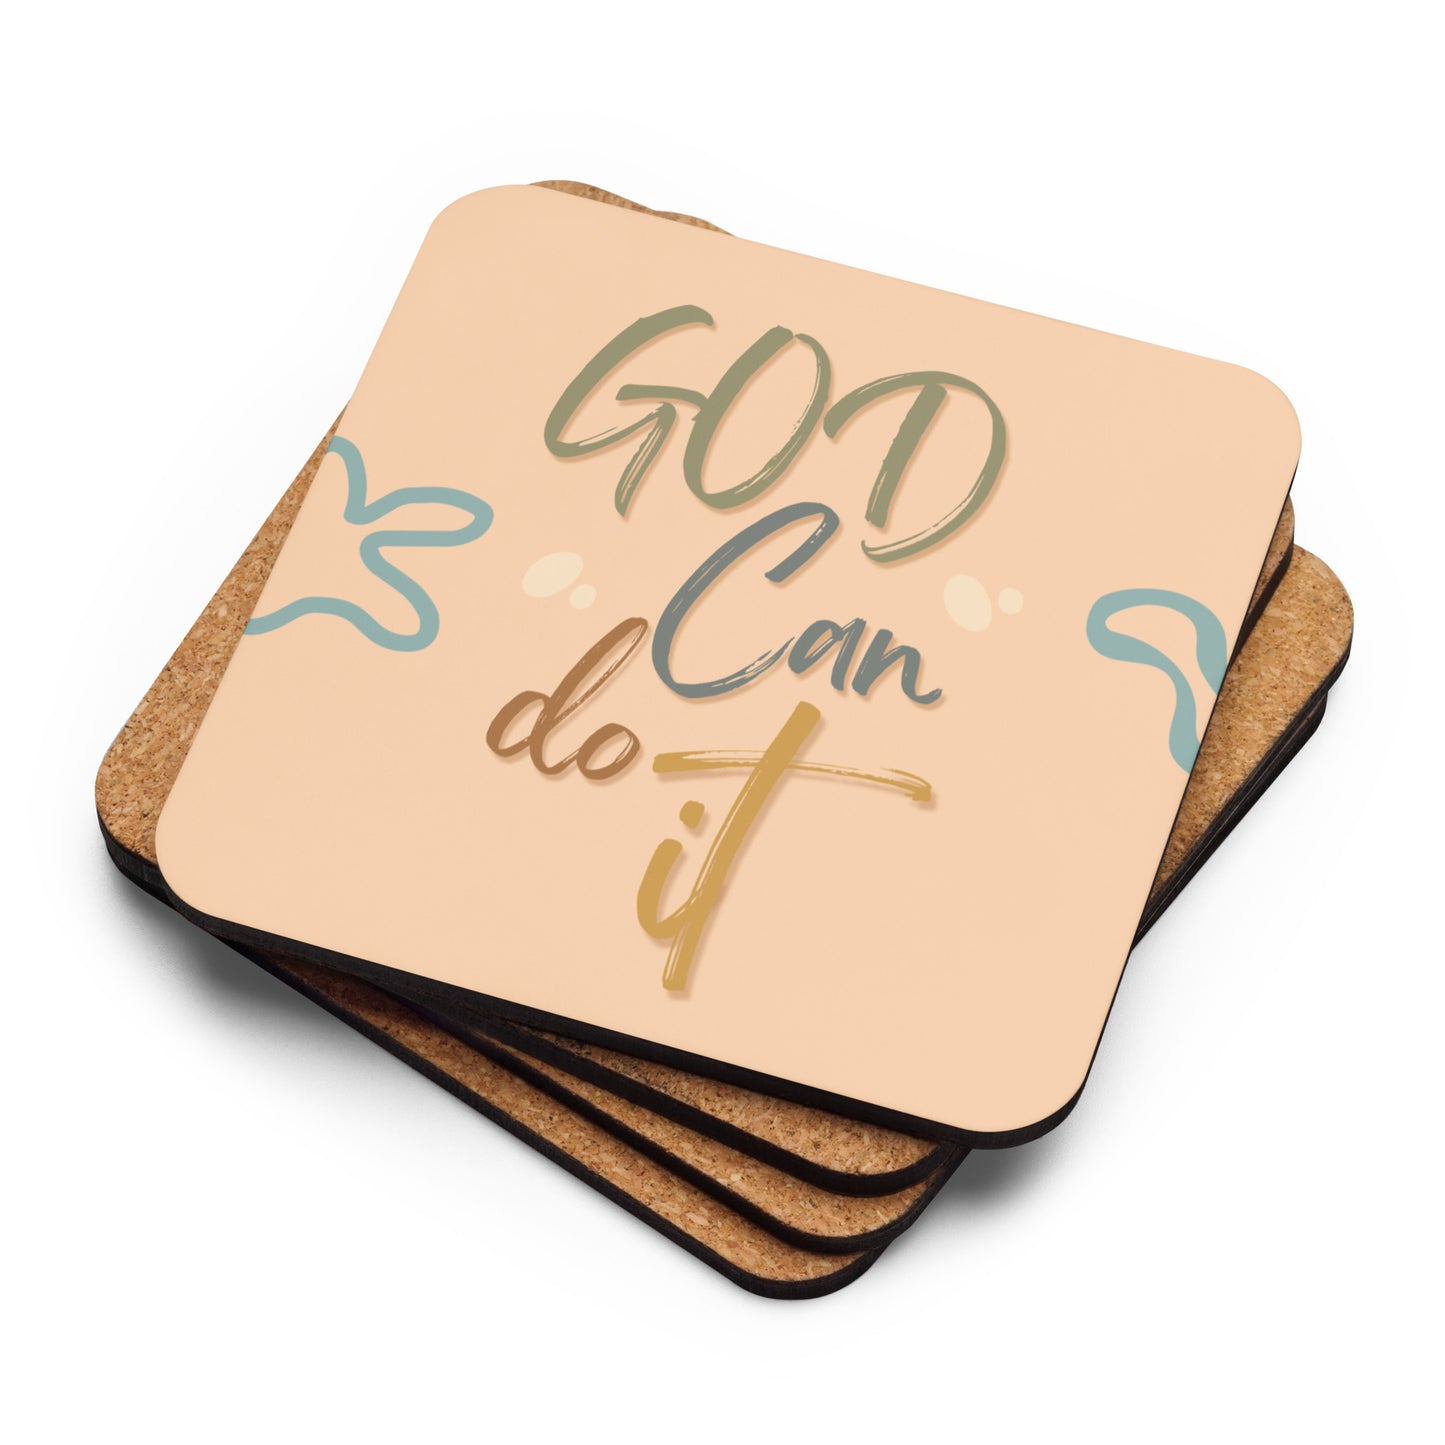 GOD Can Do It - Sandy Beach Cork-back coaster